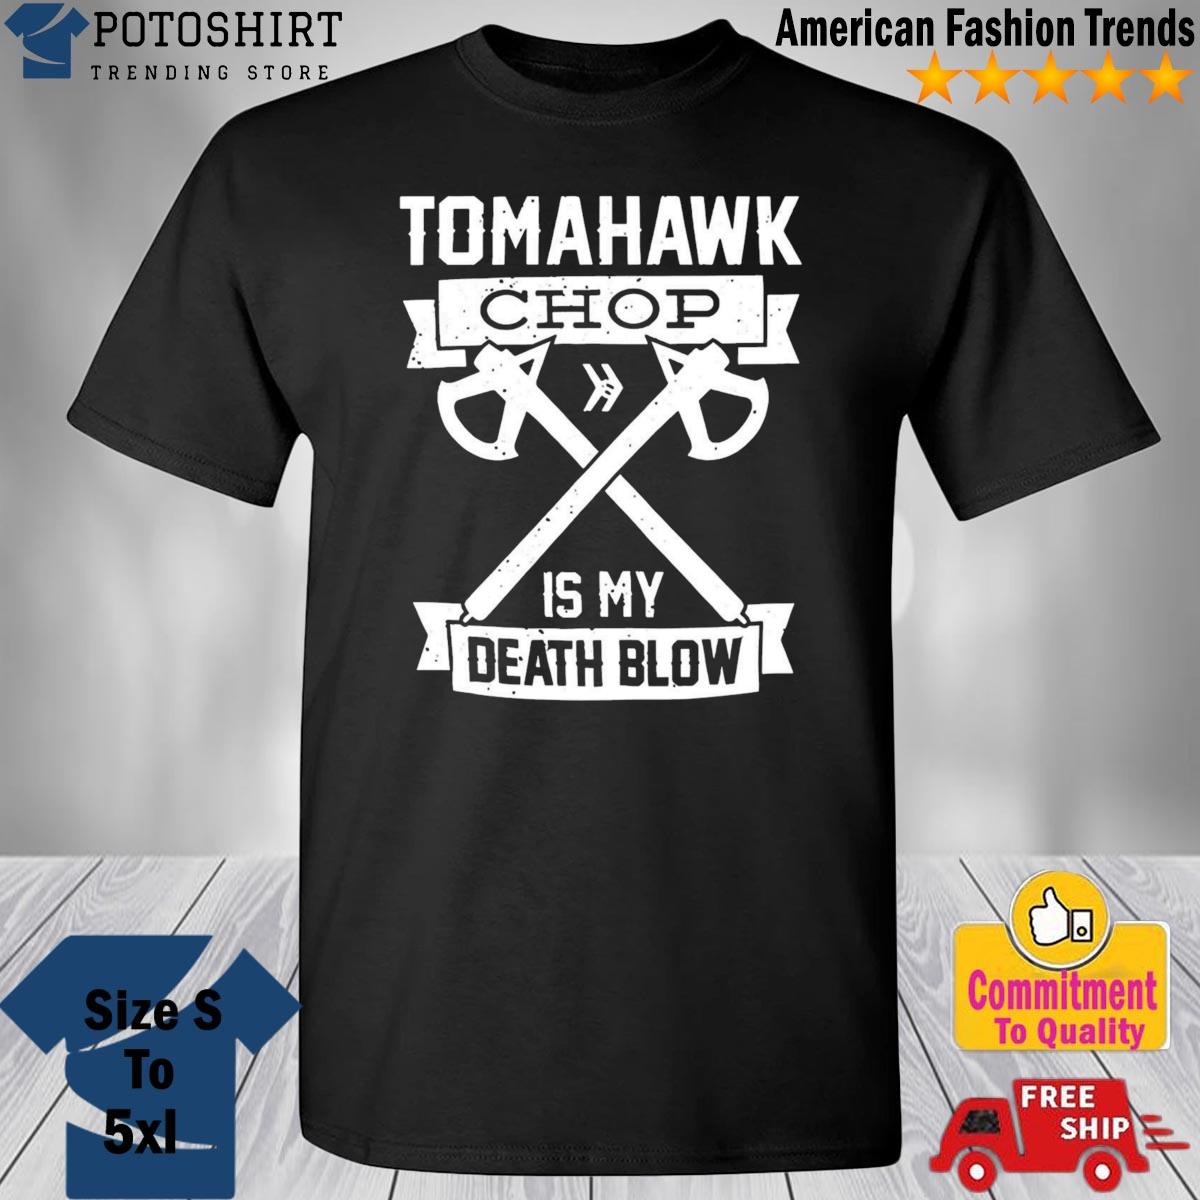 Official Tomahawk Chop 100M Tee Shirt Smosh Store - Long Sleeve T Shirt,  Sweatshirt, Hoodie, T Shirt